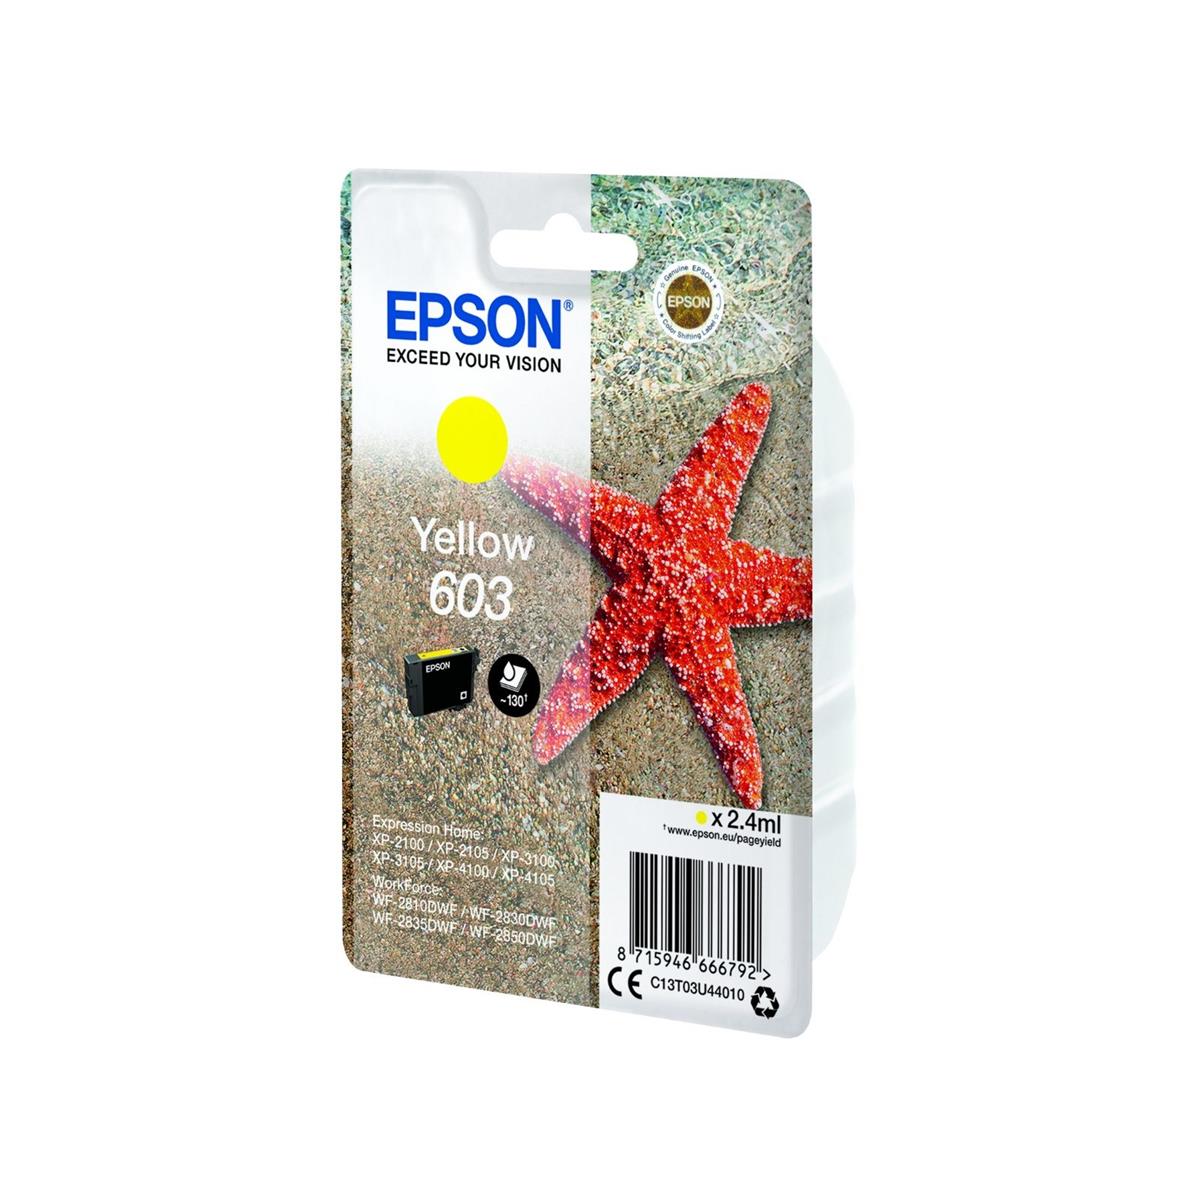 EPSON 603 YELLOW INK CART 2.4ML